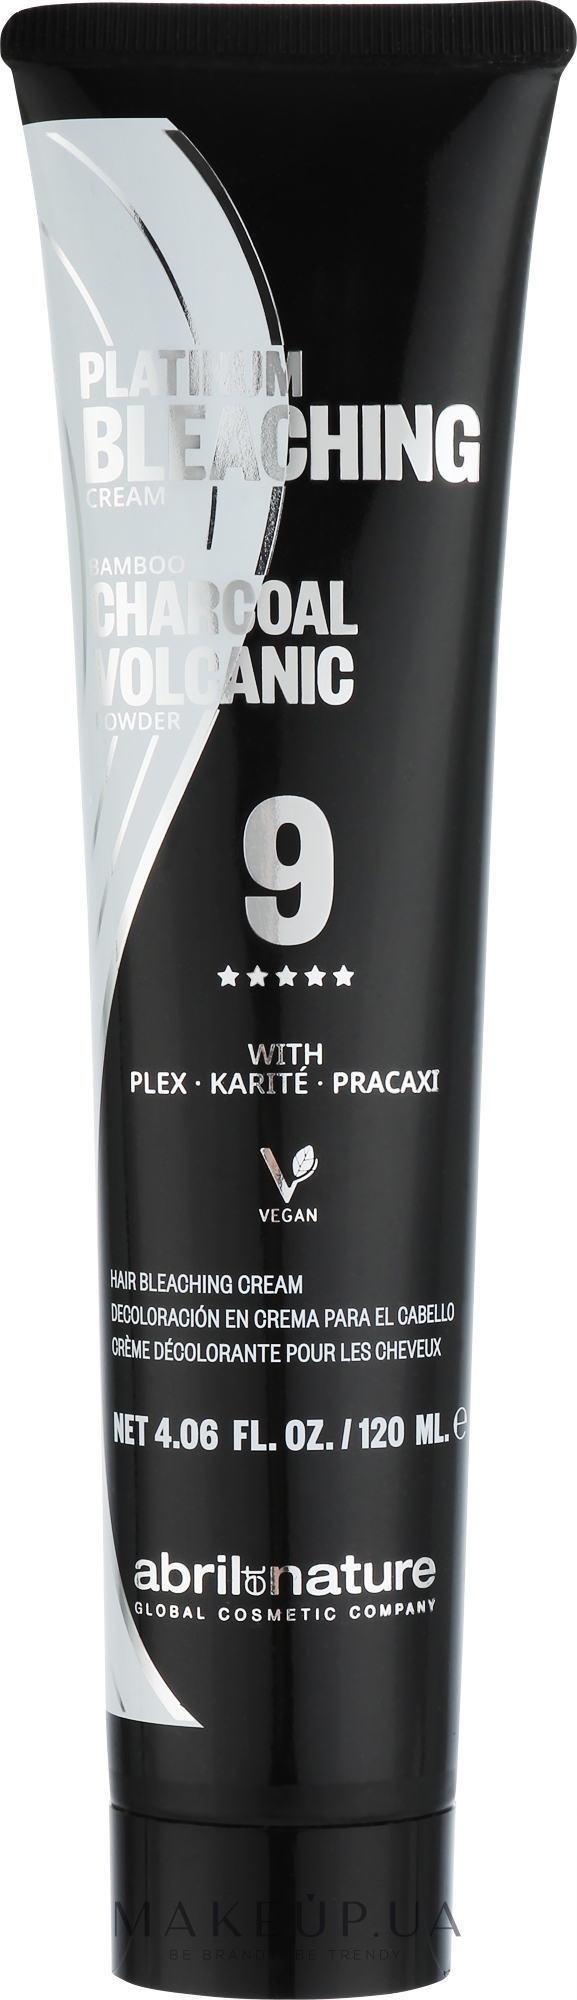 Освітлюючий крем для волосся - Abril et Nature Black Carbon Platinum Bleaching Cream — фото 120ml